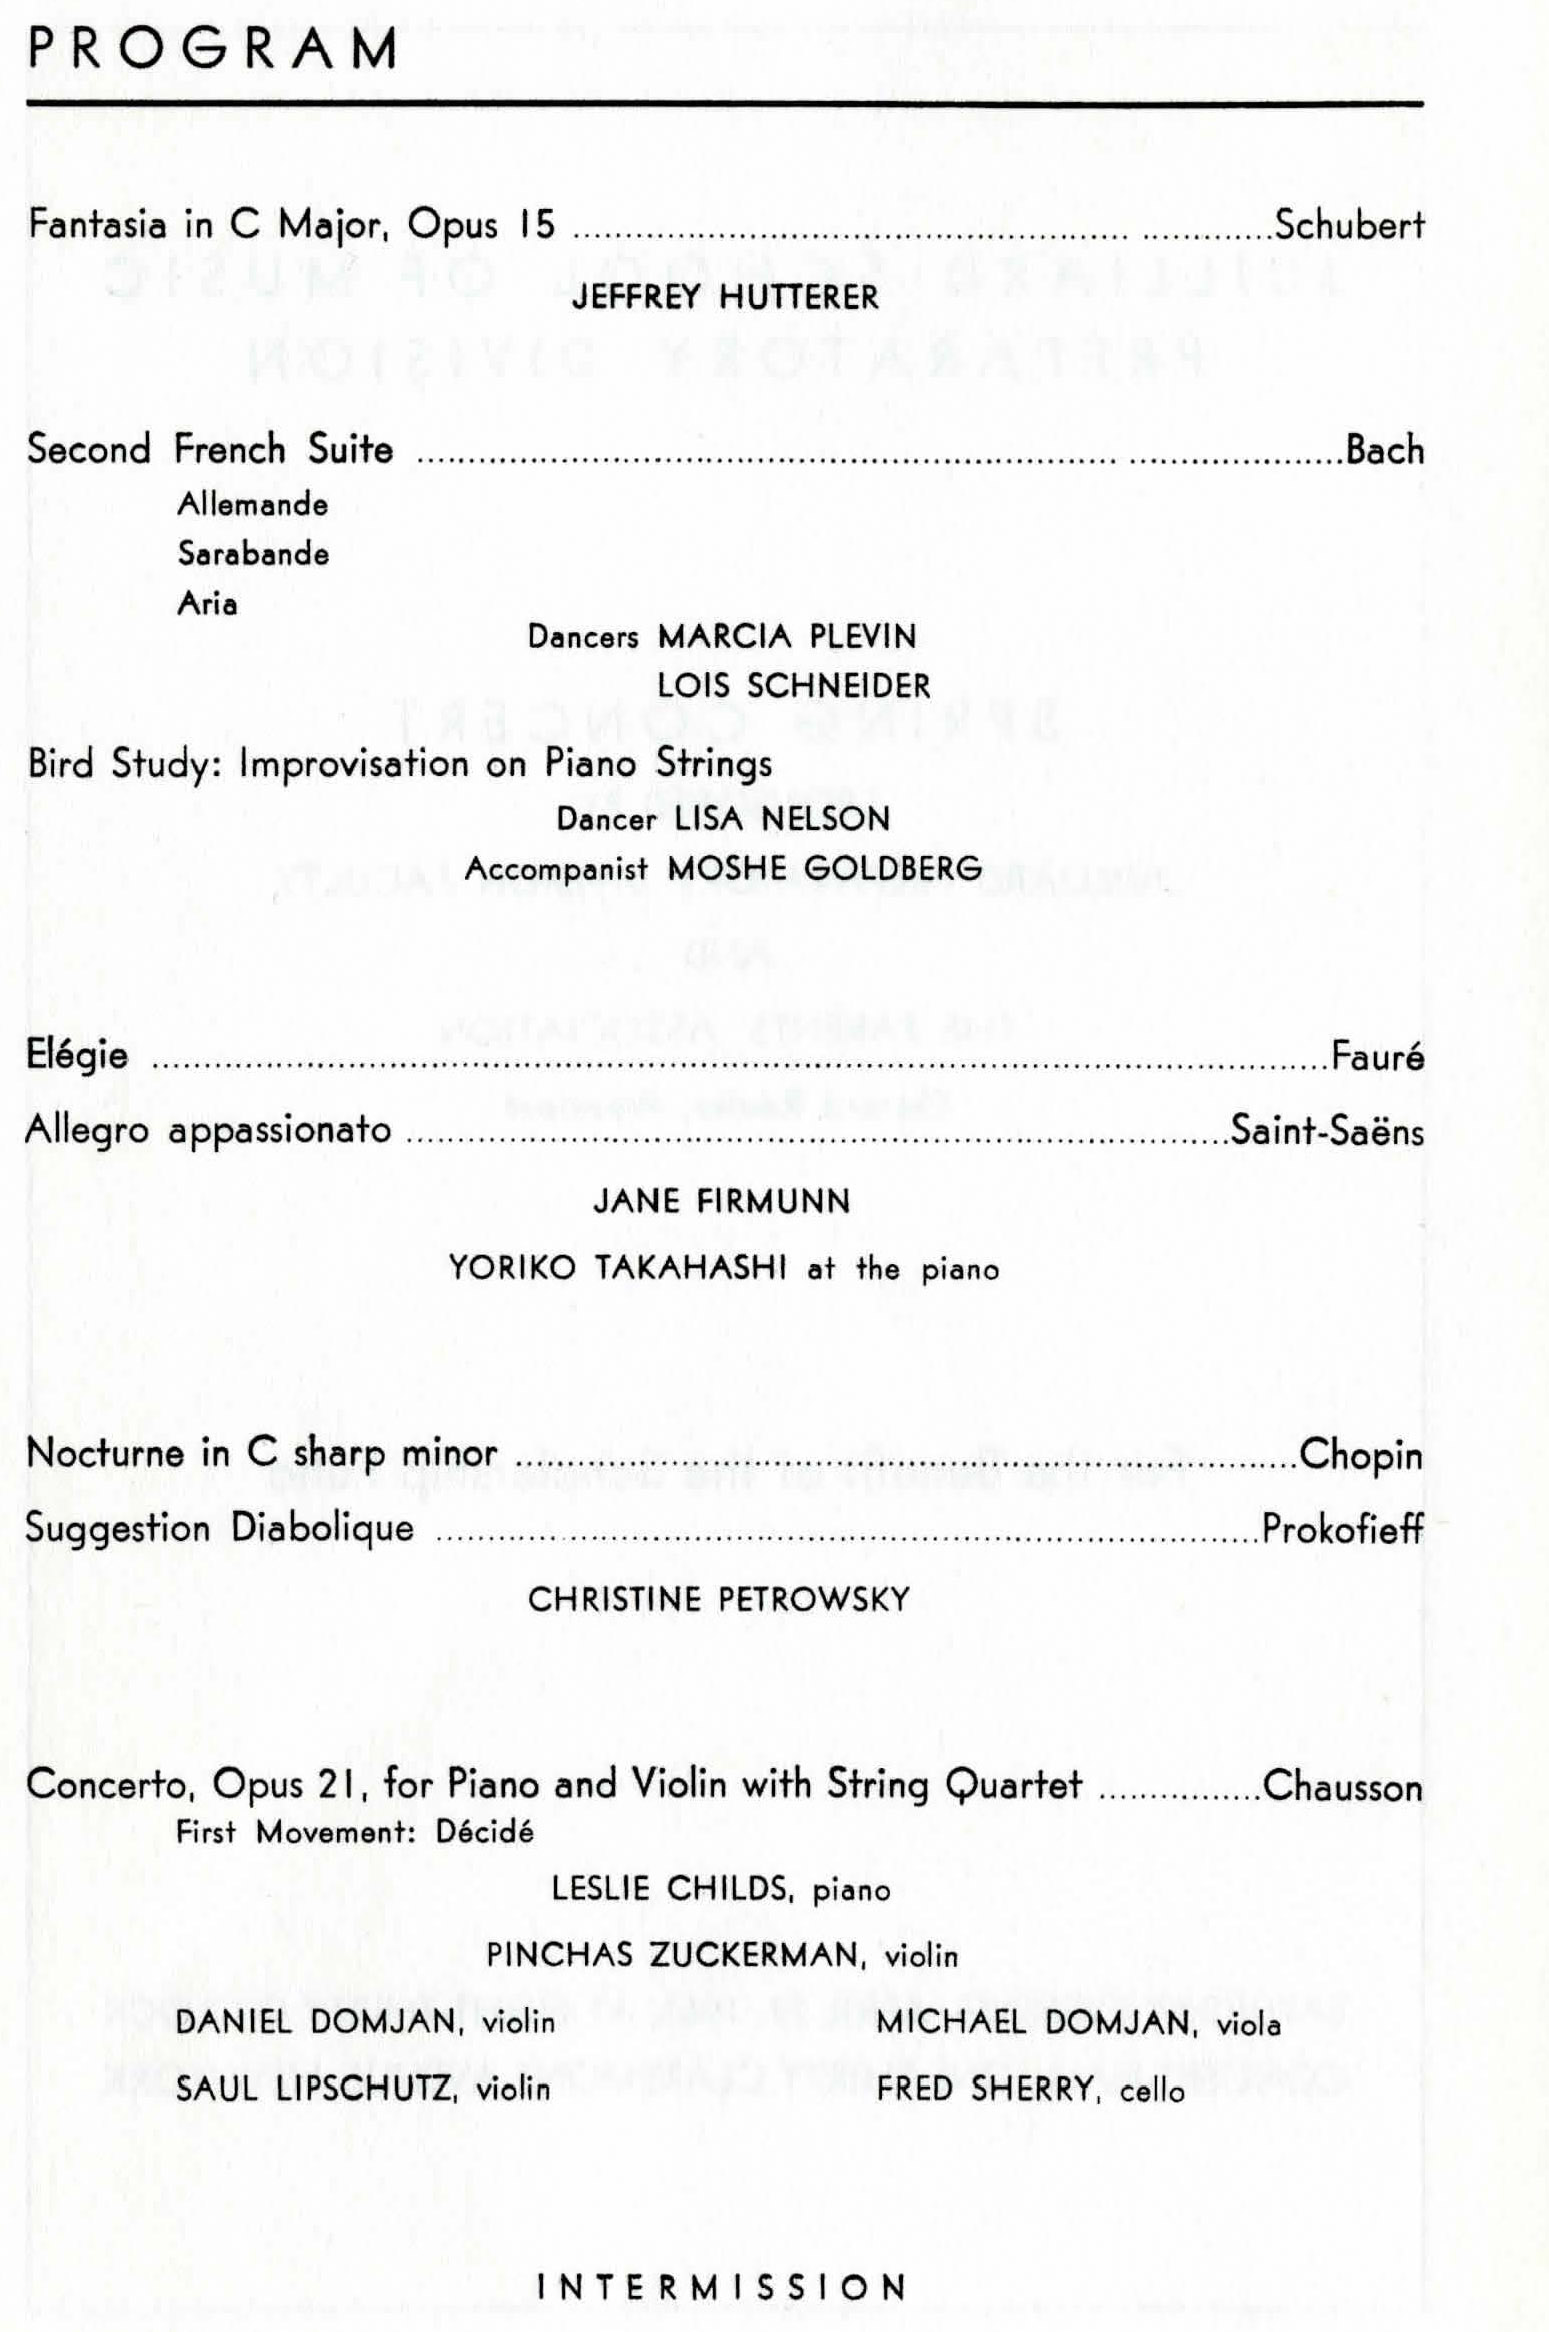 1963 concert program